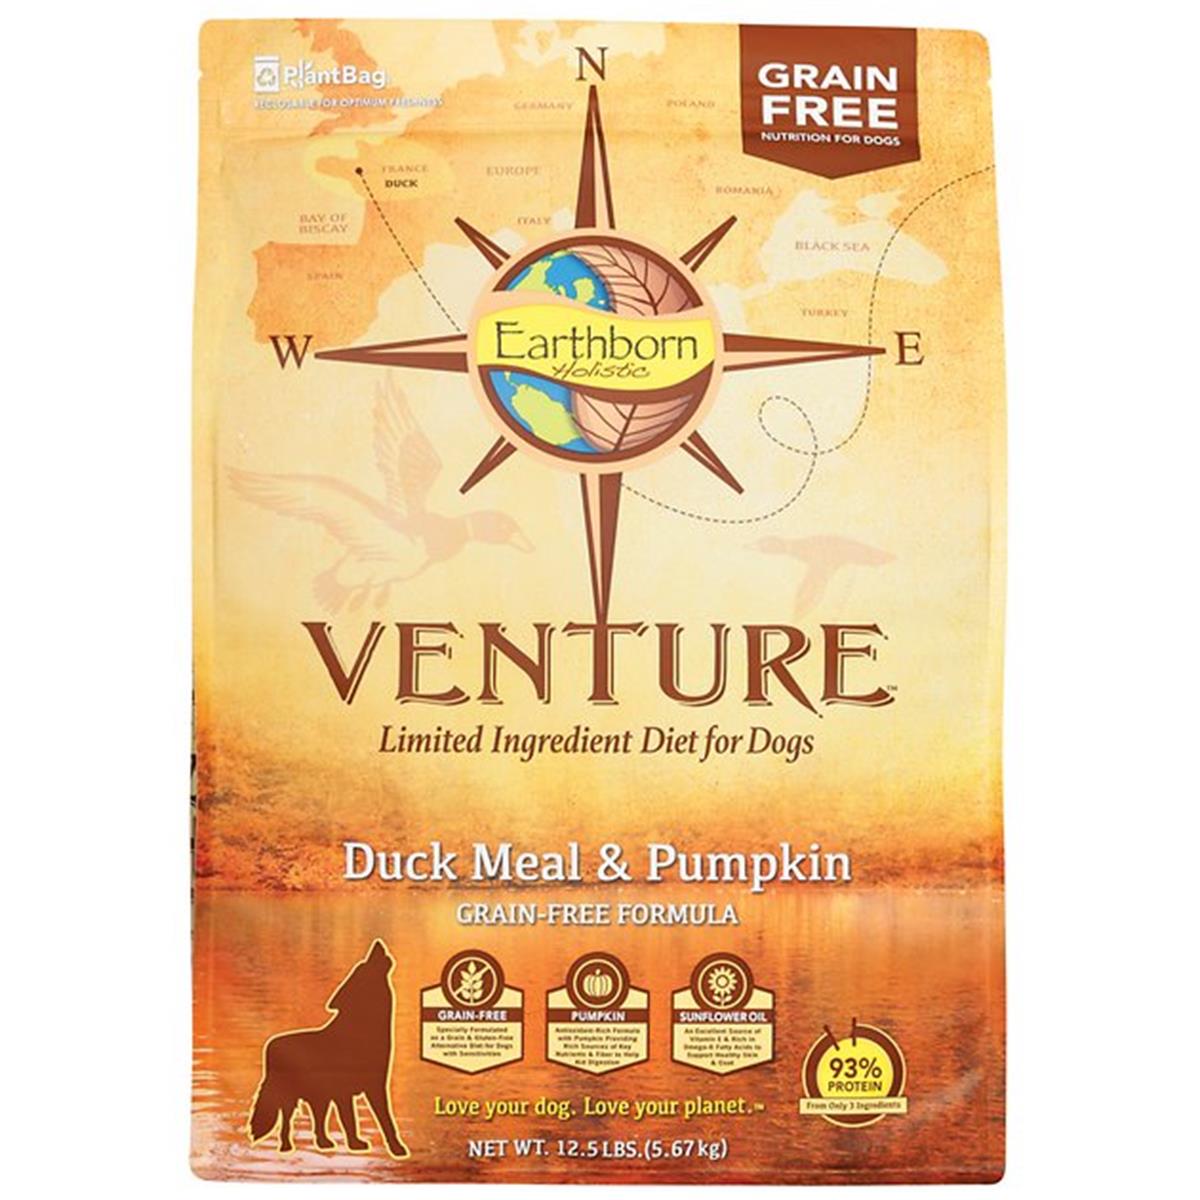 Pf57011 Venture Duck Meal & Pumpkin Grain-free Dry Dog Food - 12.5 Lbs